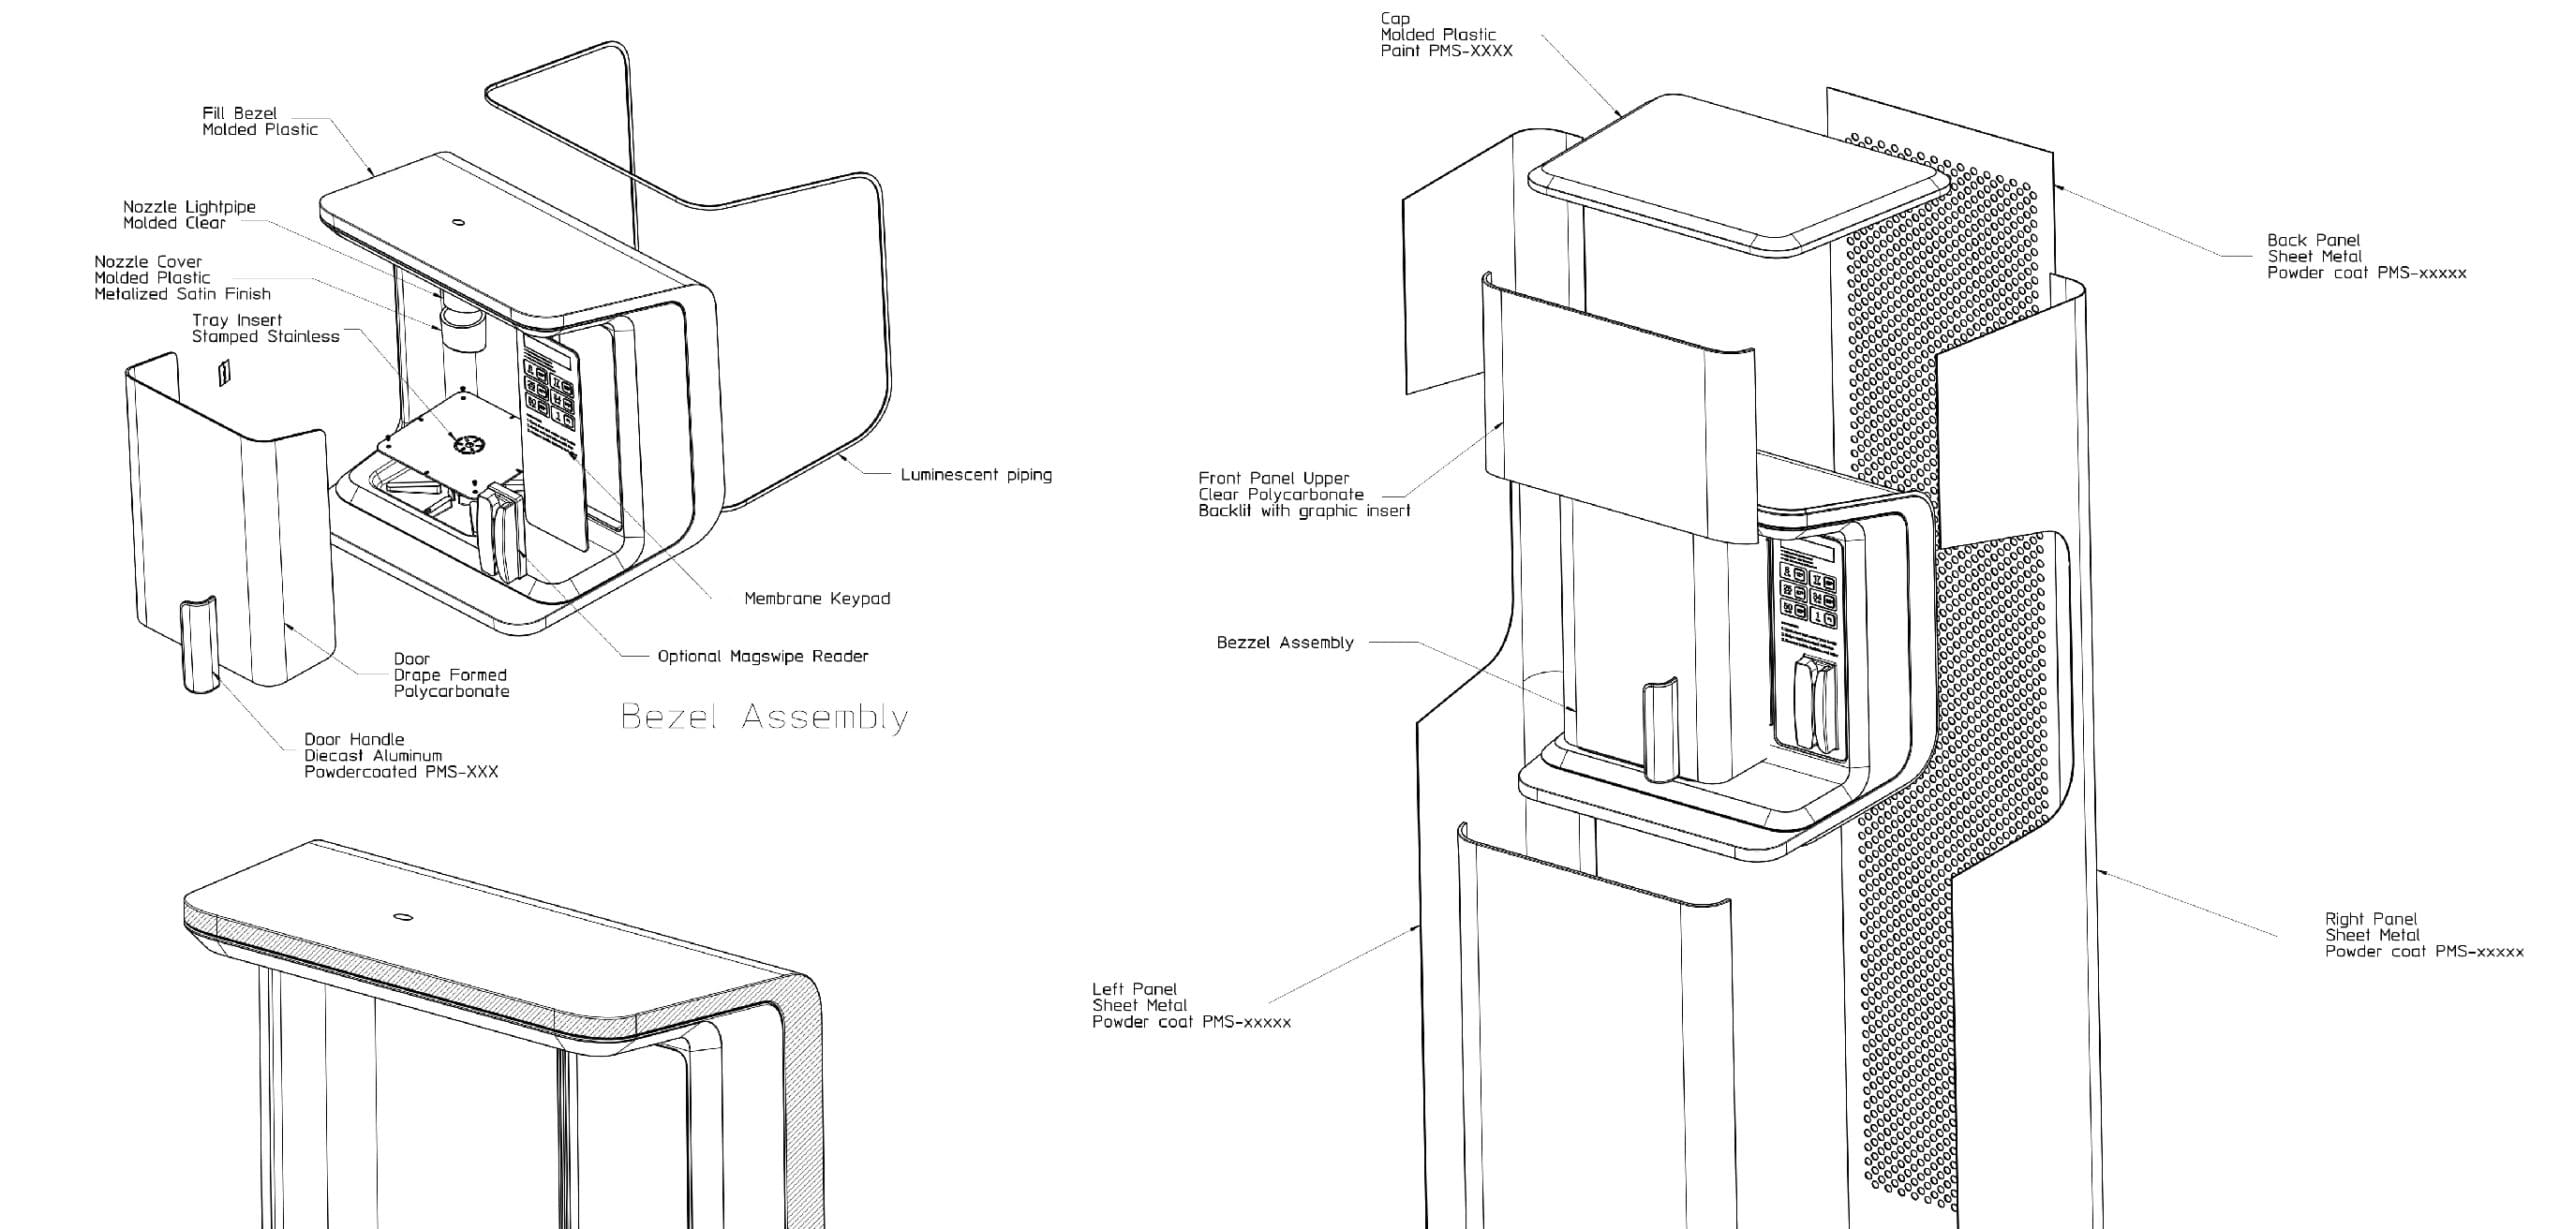 View of RKS Industrial Equipment Design FloWater Industrial Design Schematics